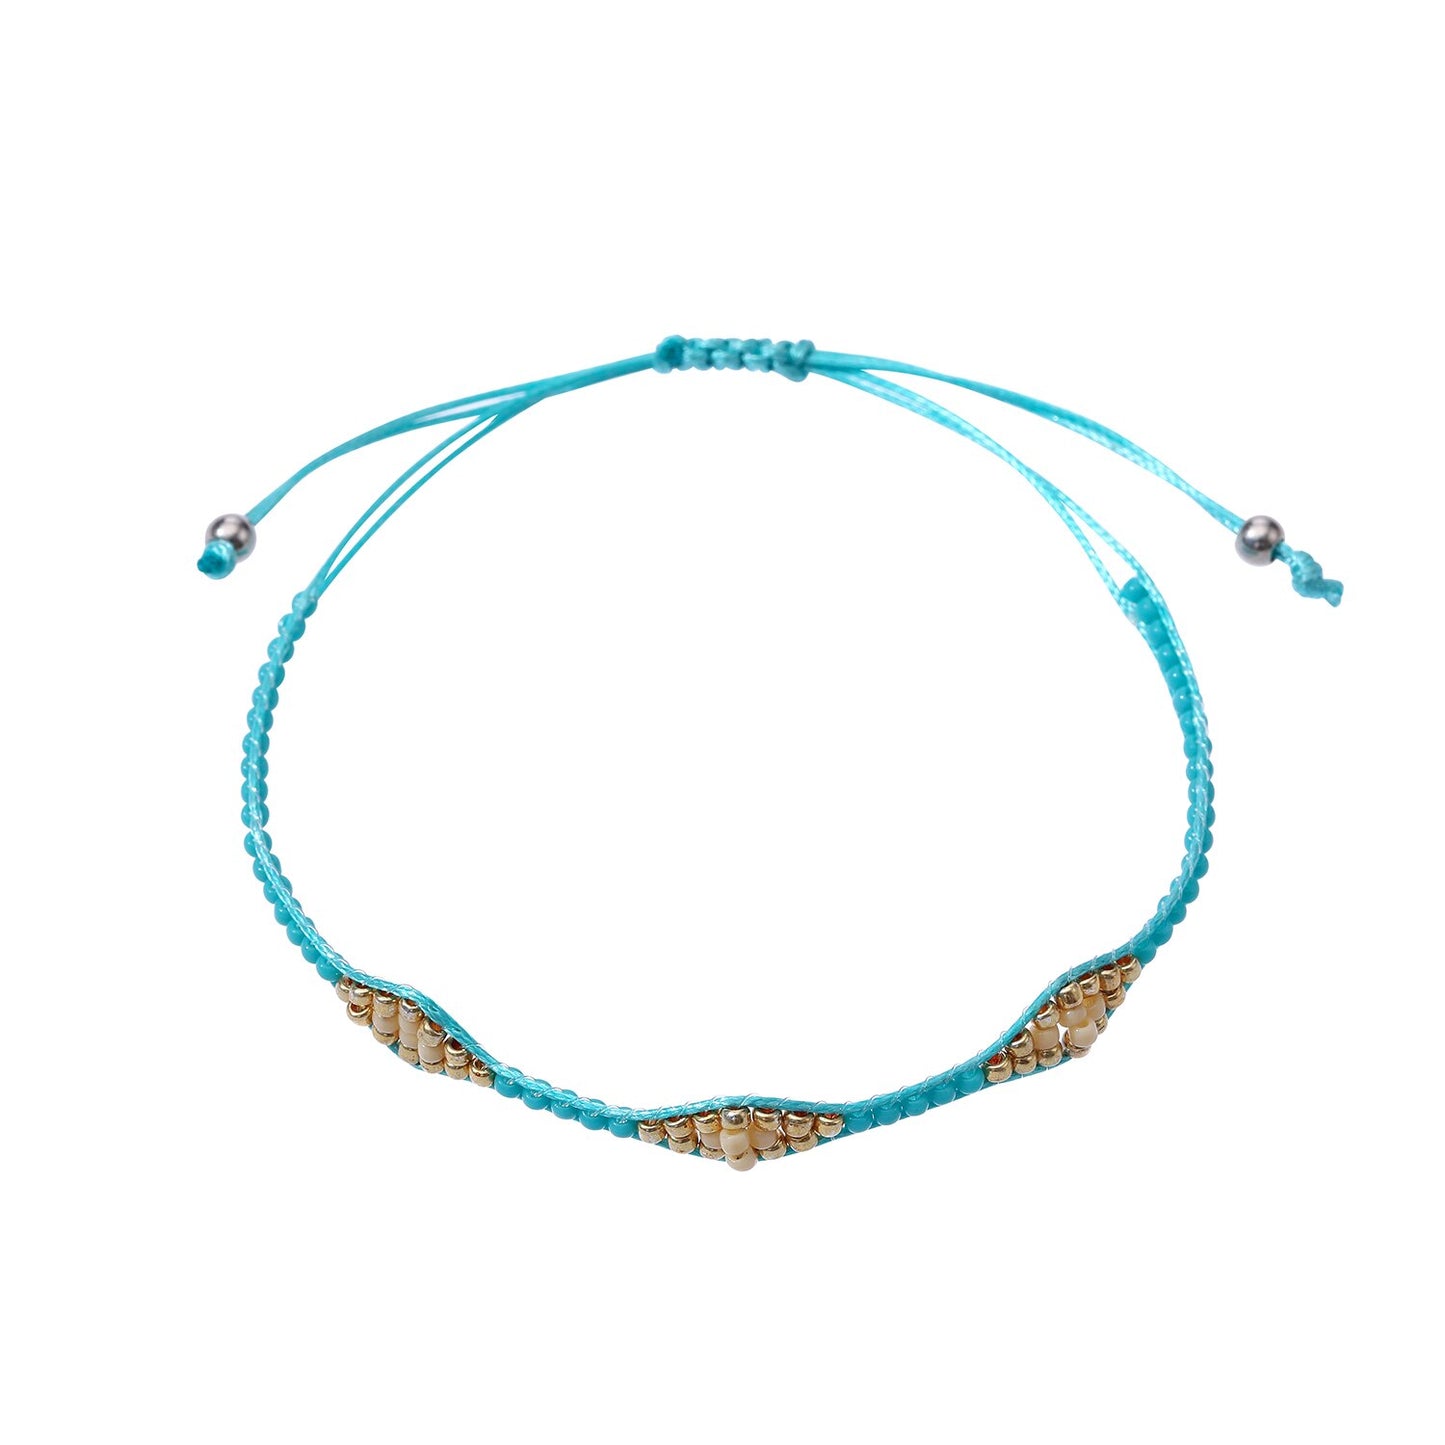 12pcs/lot Bohemia Woman Men Handmade Weave Adjustable Rope Chain Crystal Charms Bracelets Wrap Bangle Wristband Fashion Jewelry